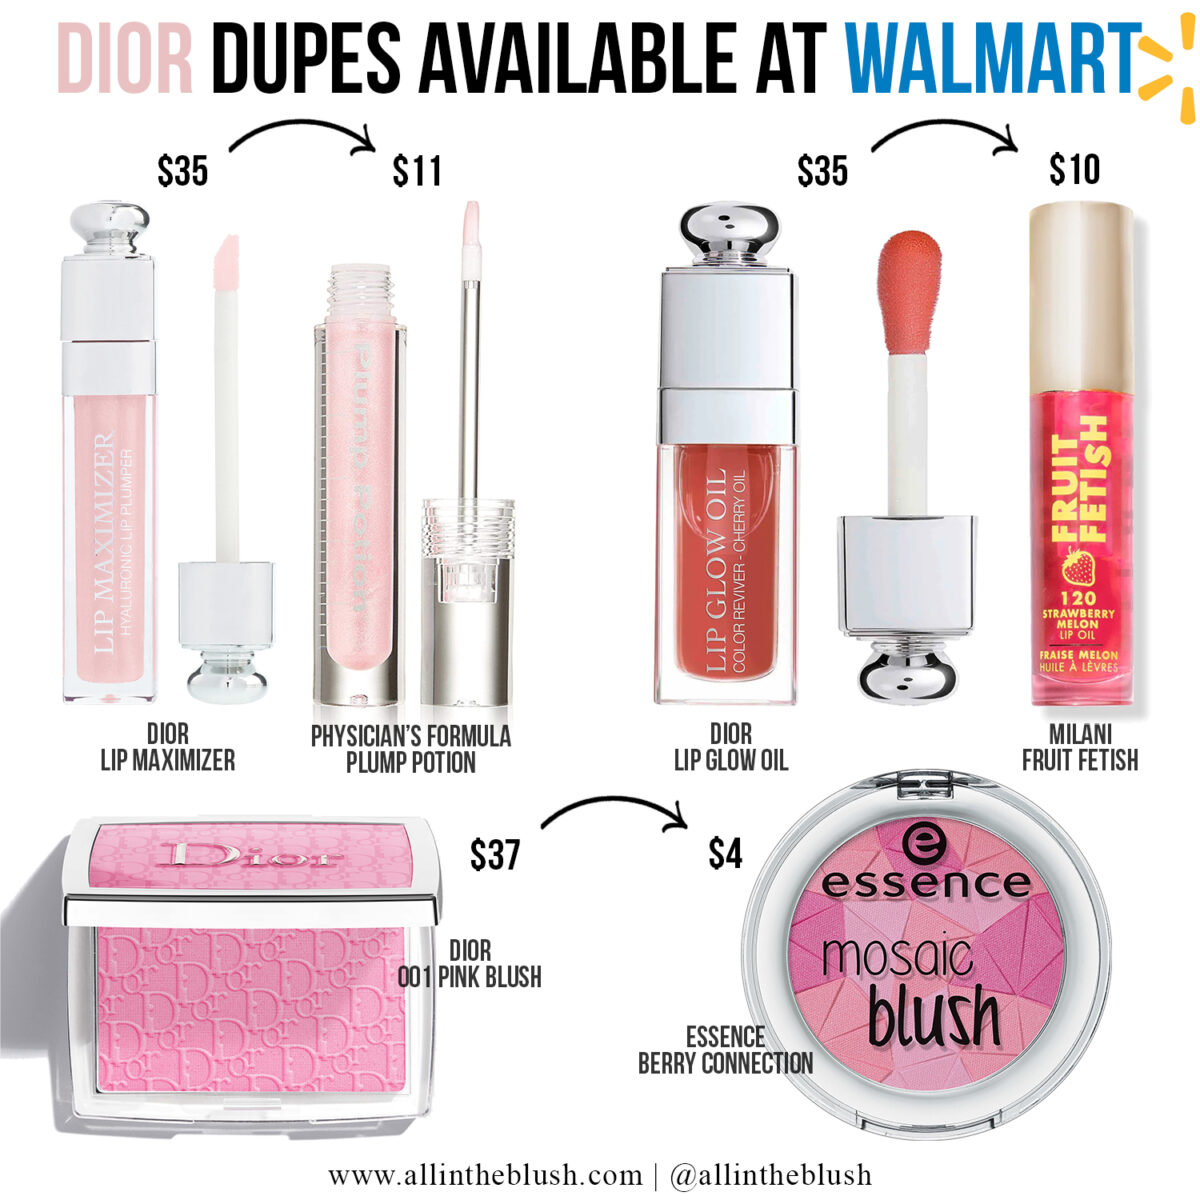 Dior Dupes Available at Walmart!